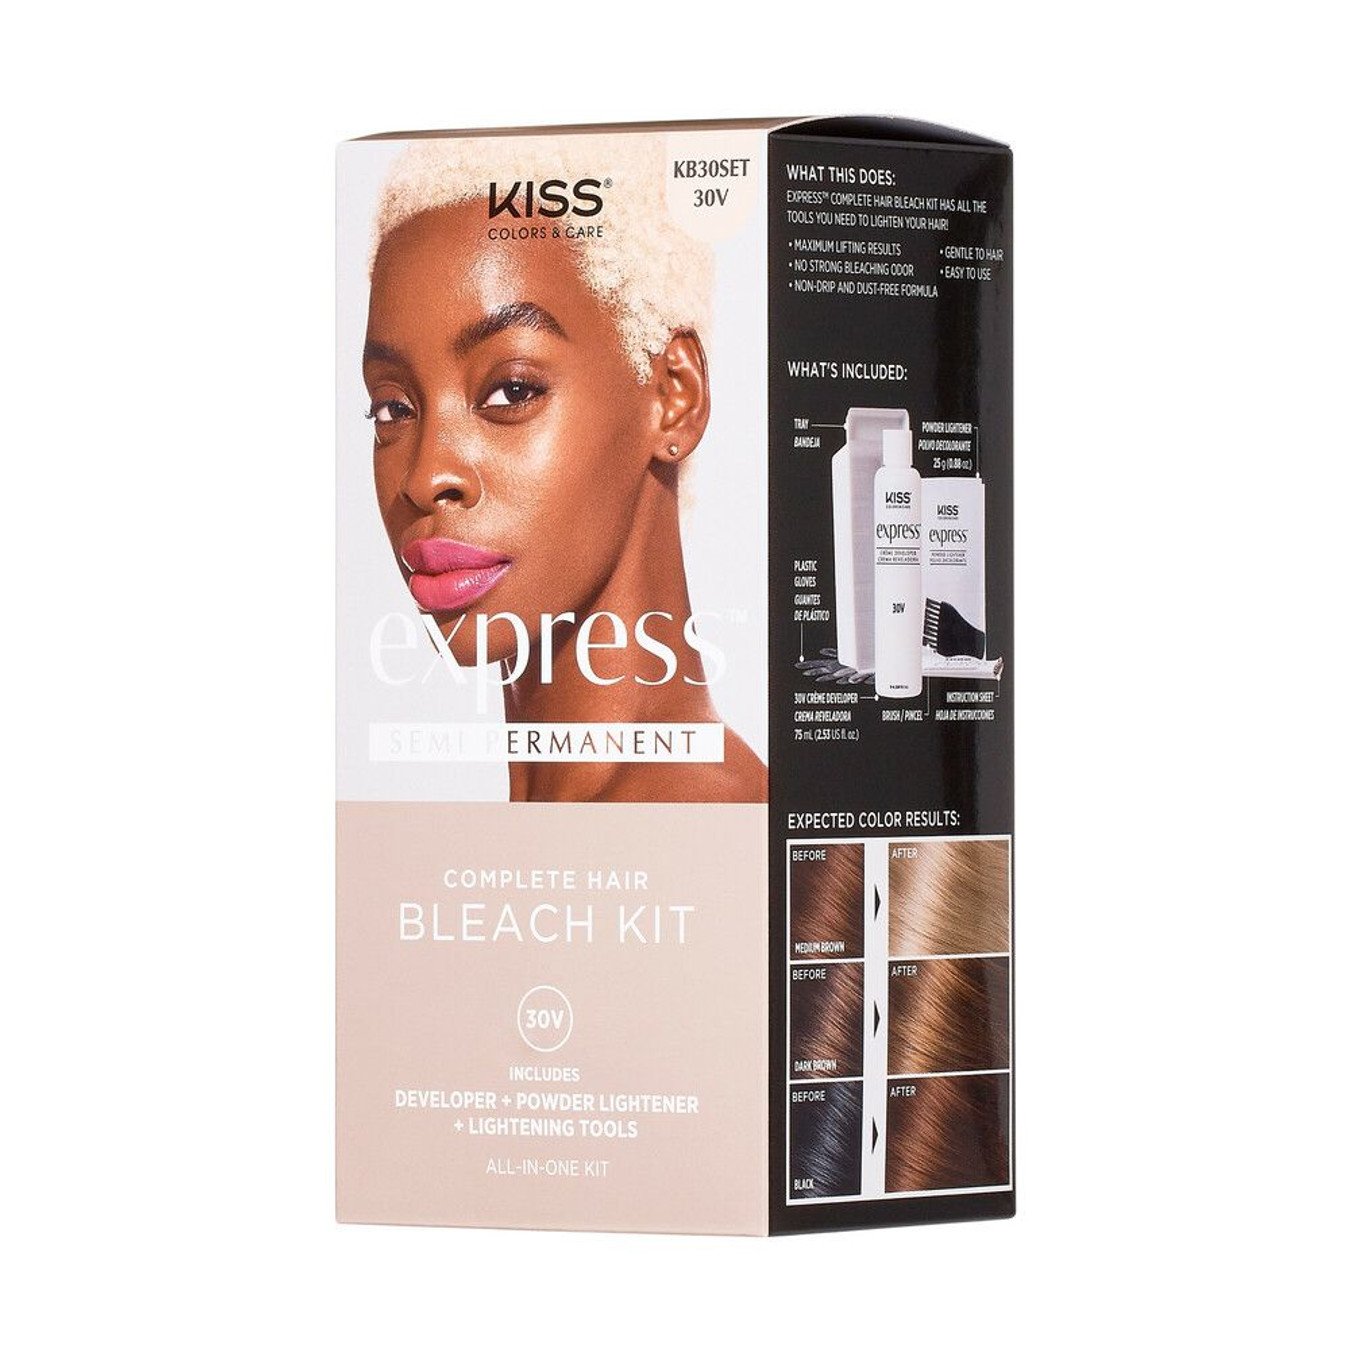 KISS Colors & Care Express Semi-Permanent Complete Hair Bleach Kit